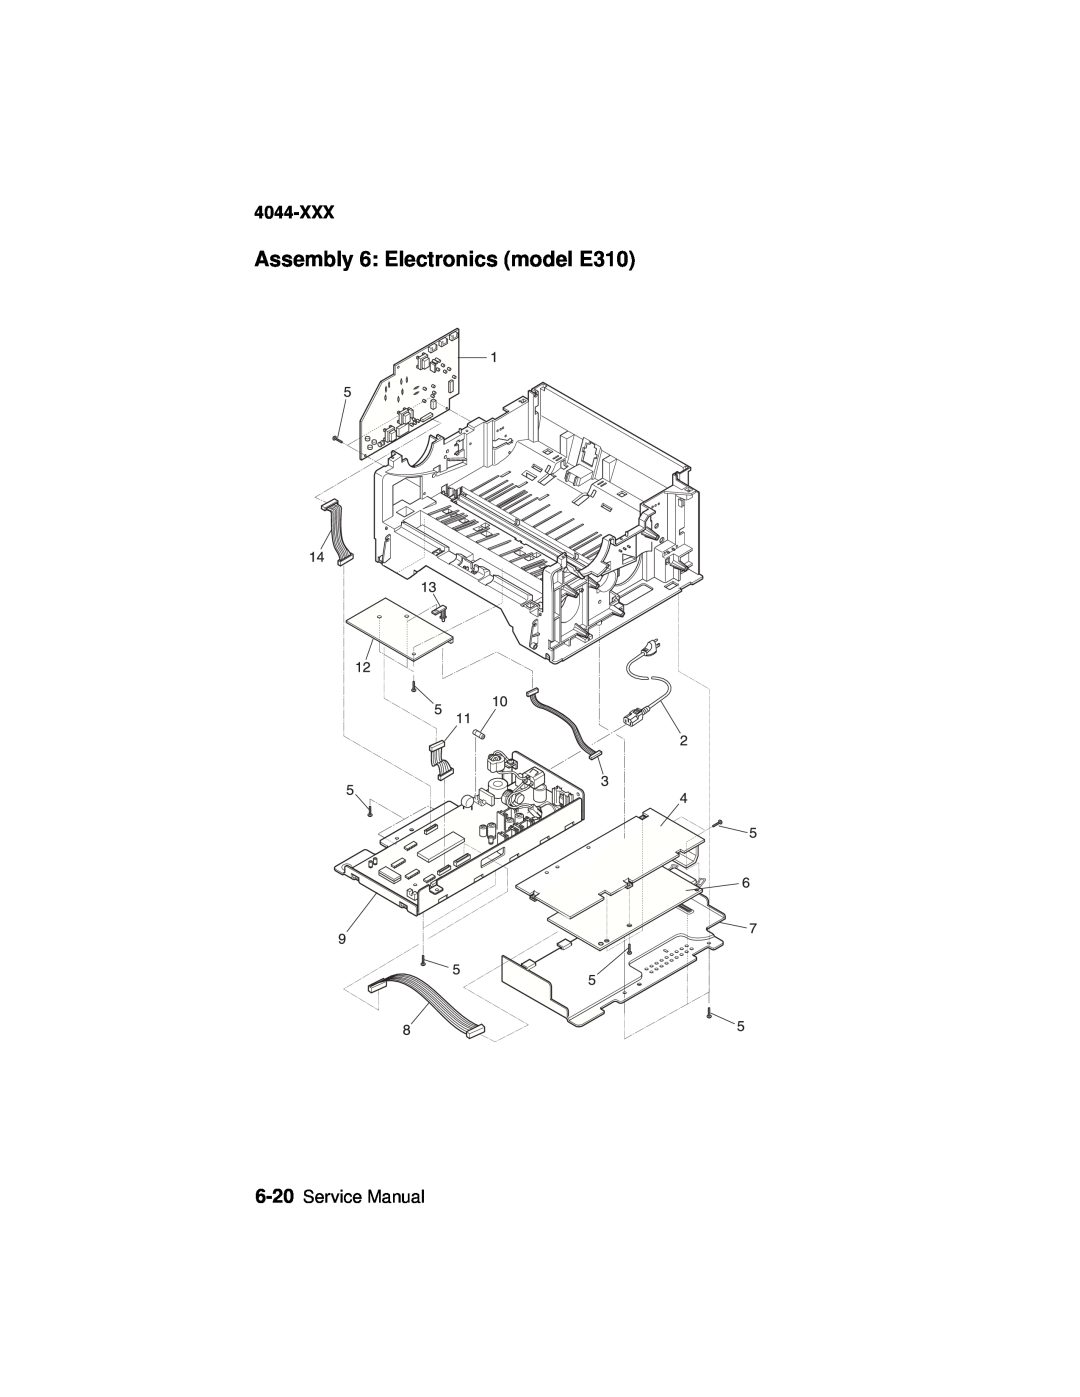 Lexmark 4044-XXX manual Assembly 6: Electronics model E310, Service Manual 